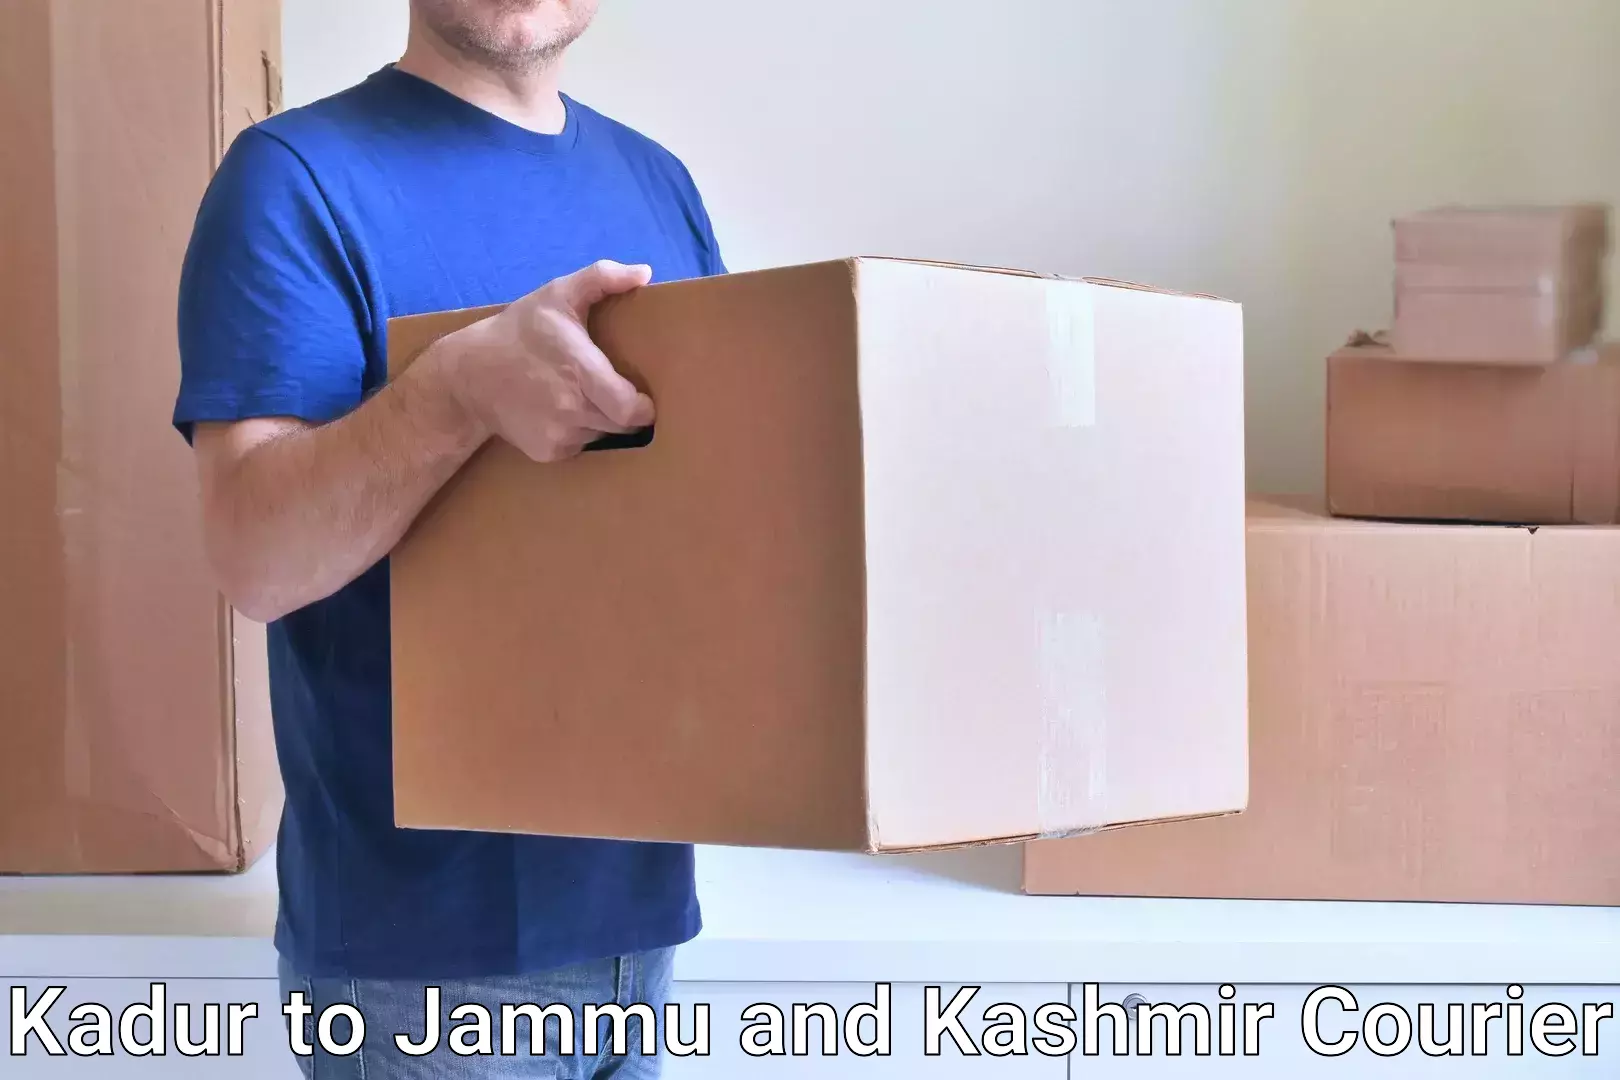 24-hour delivery options Kadur to Pulwama